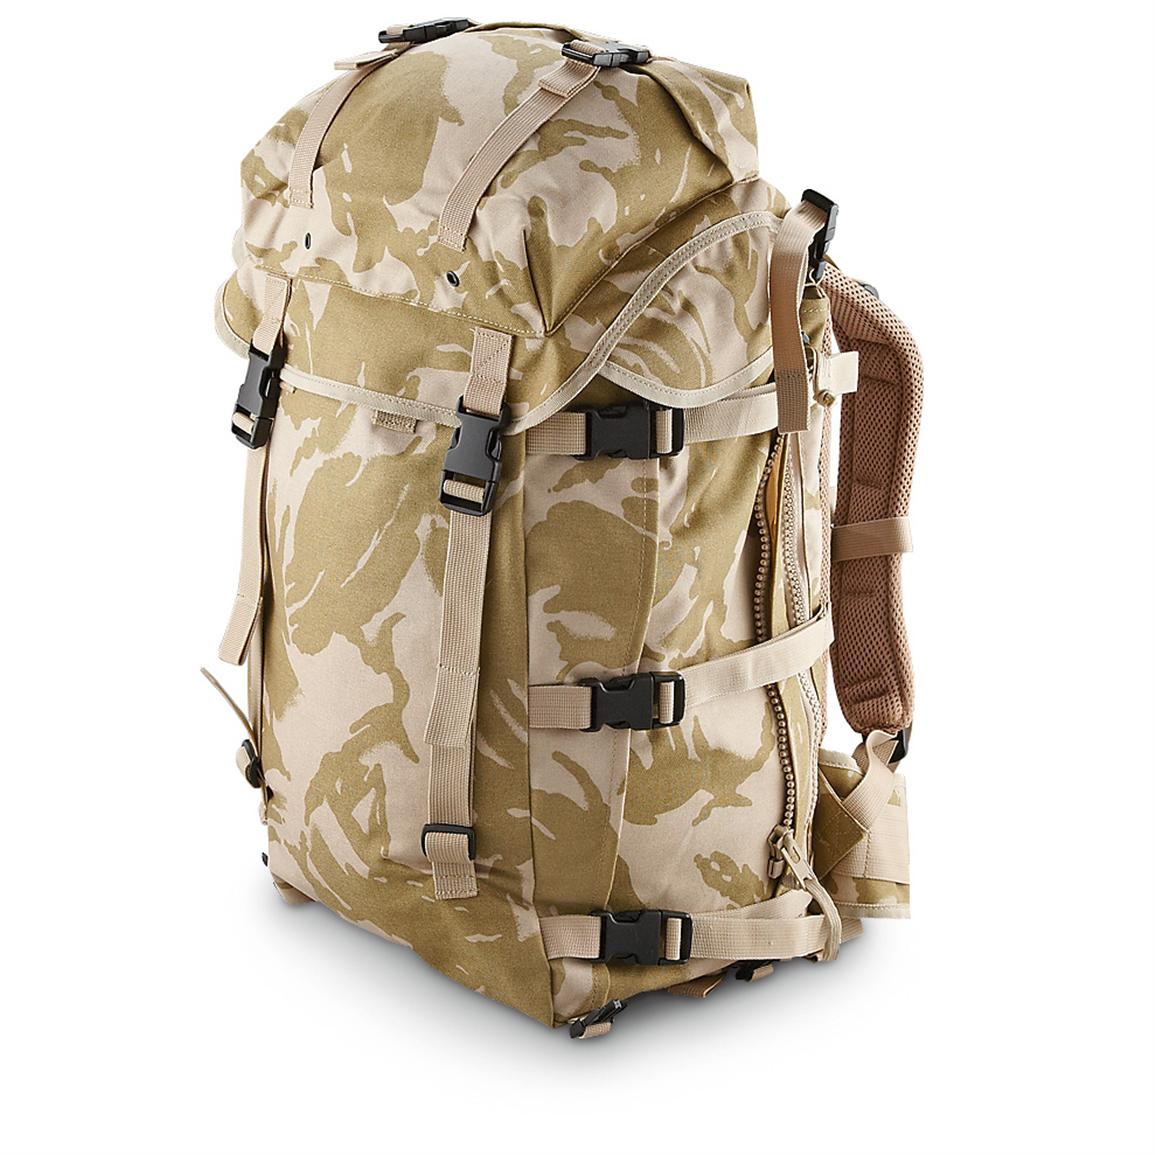 New British Tactical Radio Rucksack, Desert DPM - Rucksacks Backpacks at Guide